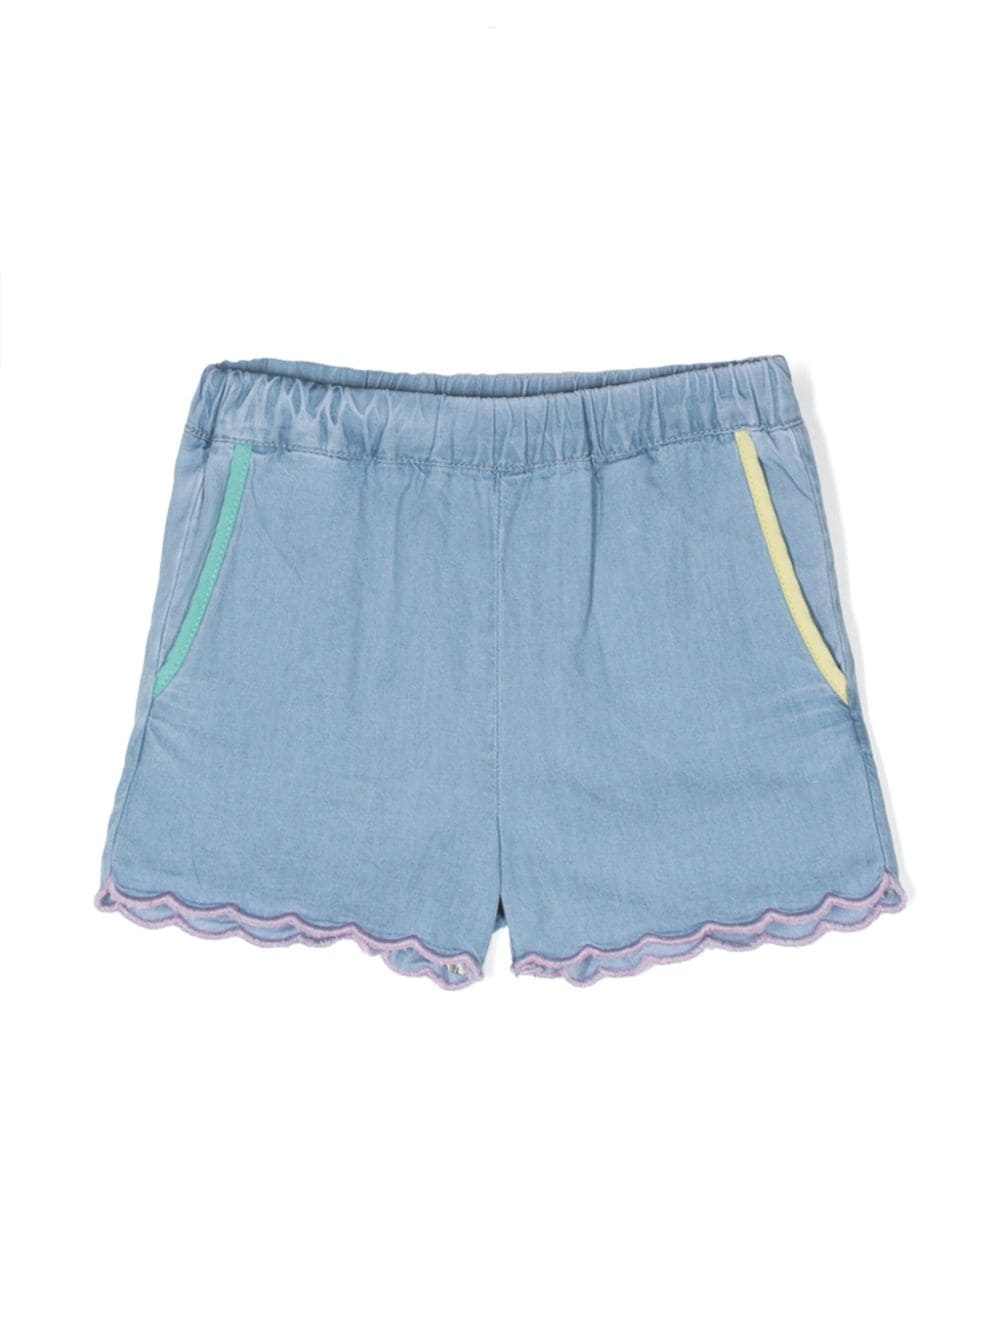 Blue denim shorts for baby girls